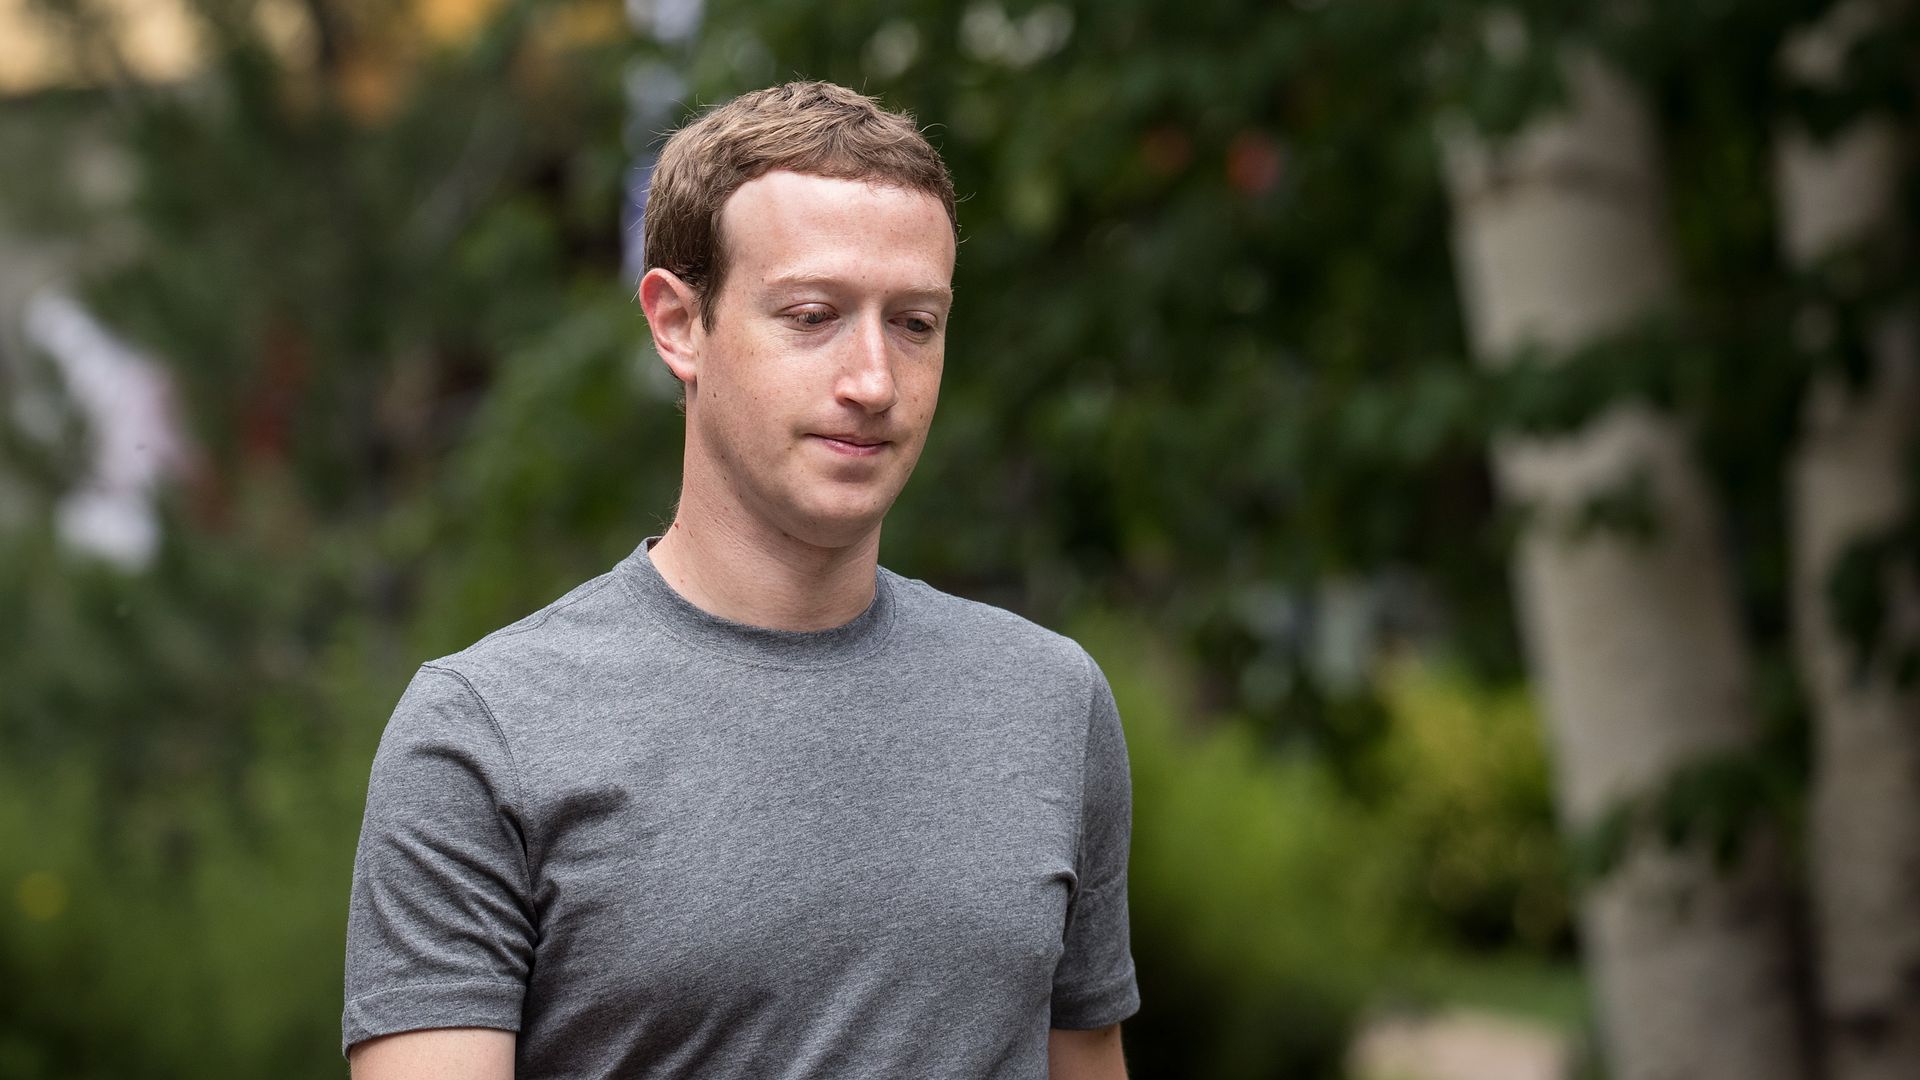 Facebook CEO Mark Zuckerberg walks wearing a t-shirt, with trees behind him